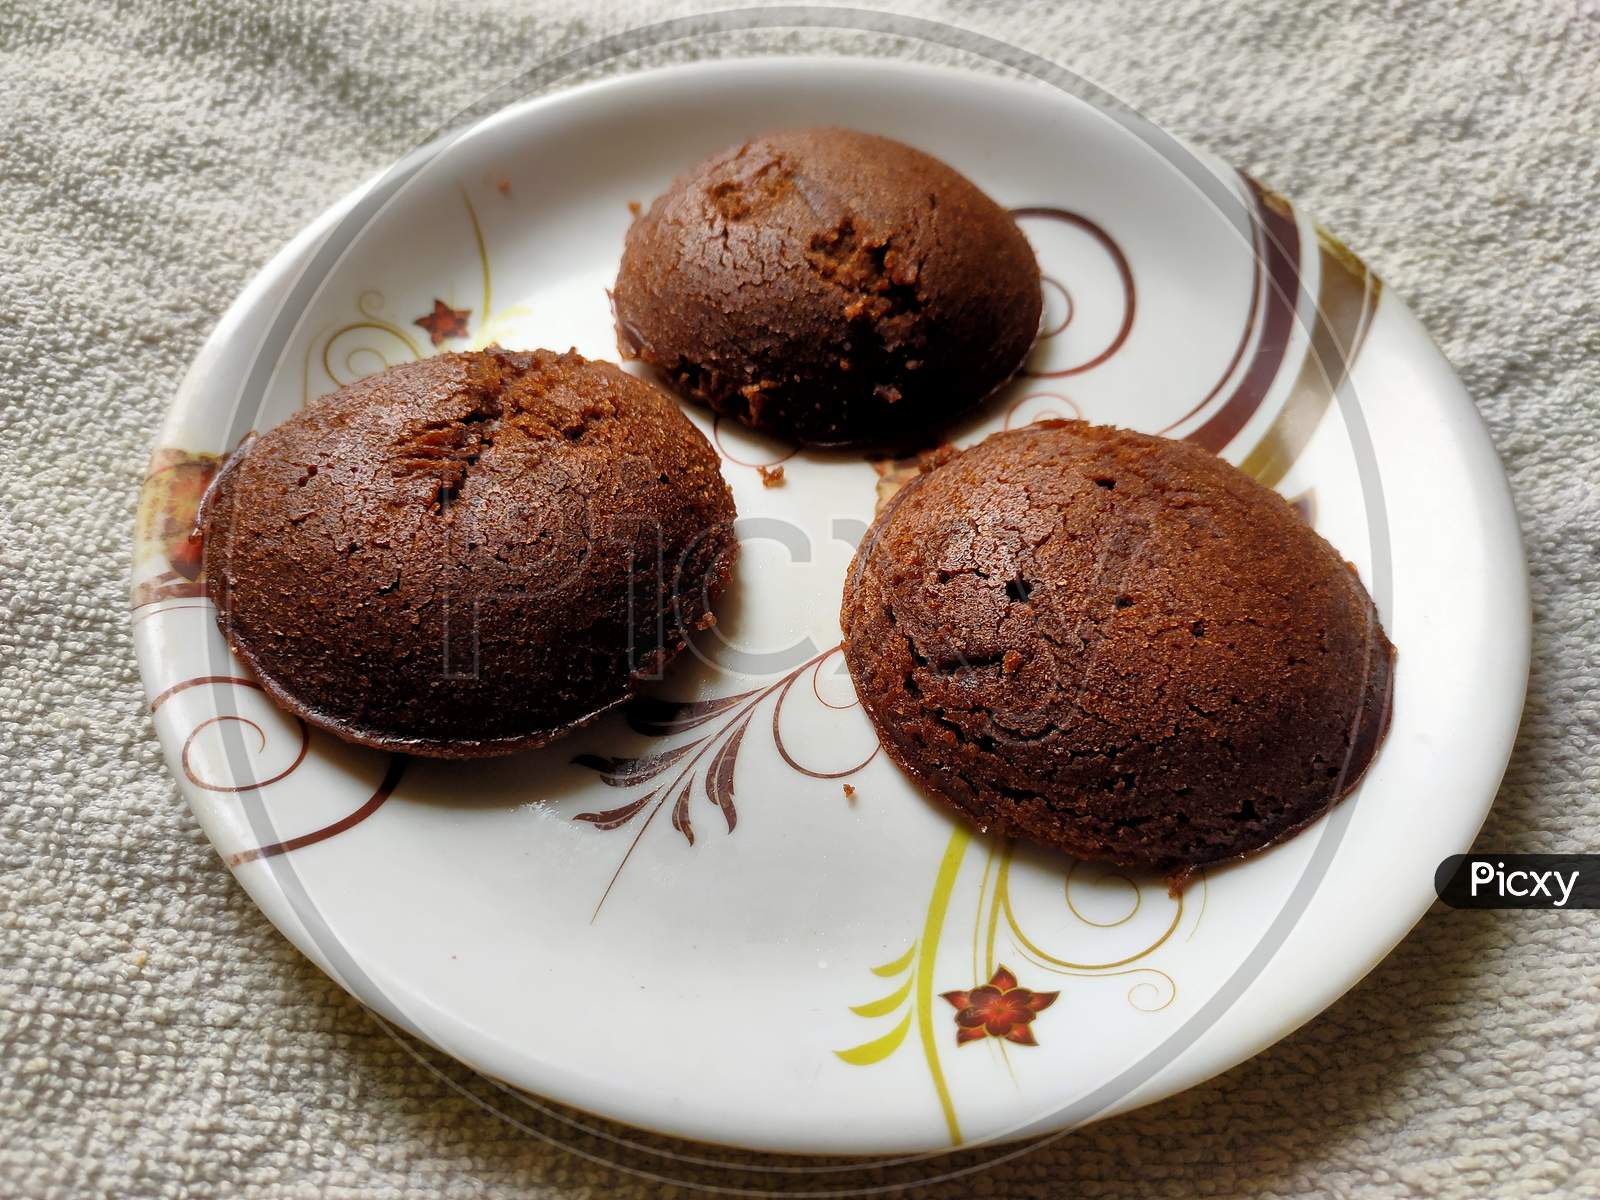 Designer Beetroot Idli Cake recipe step by step | Indian Food Recipes